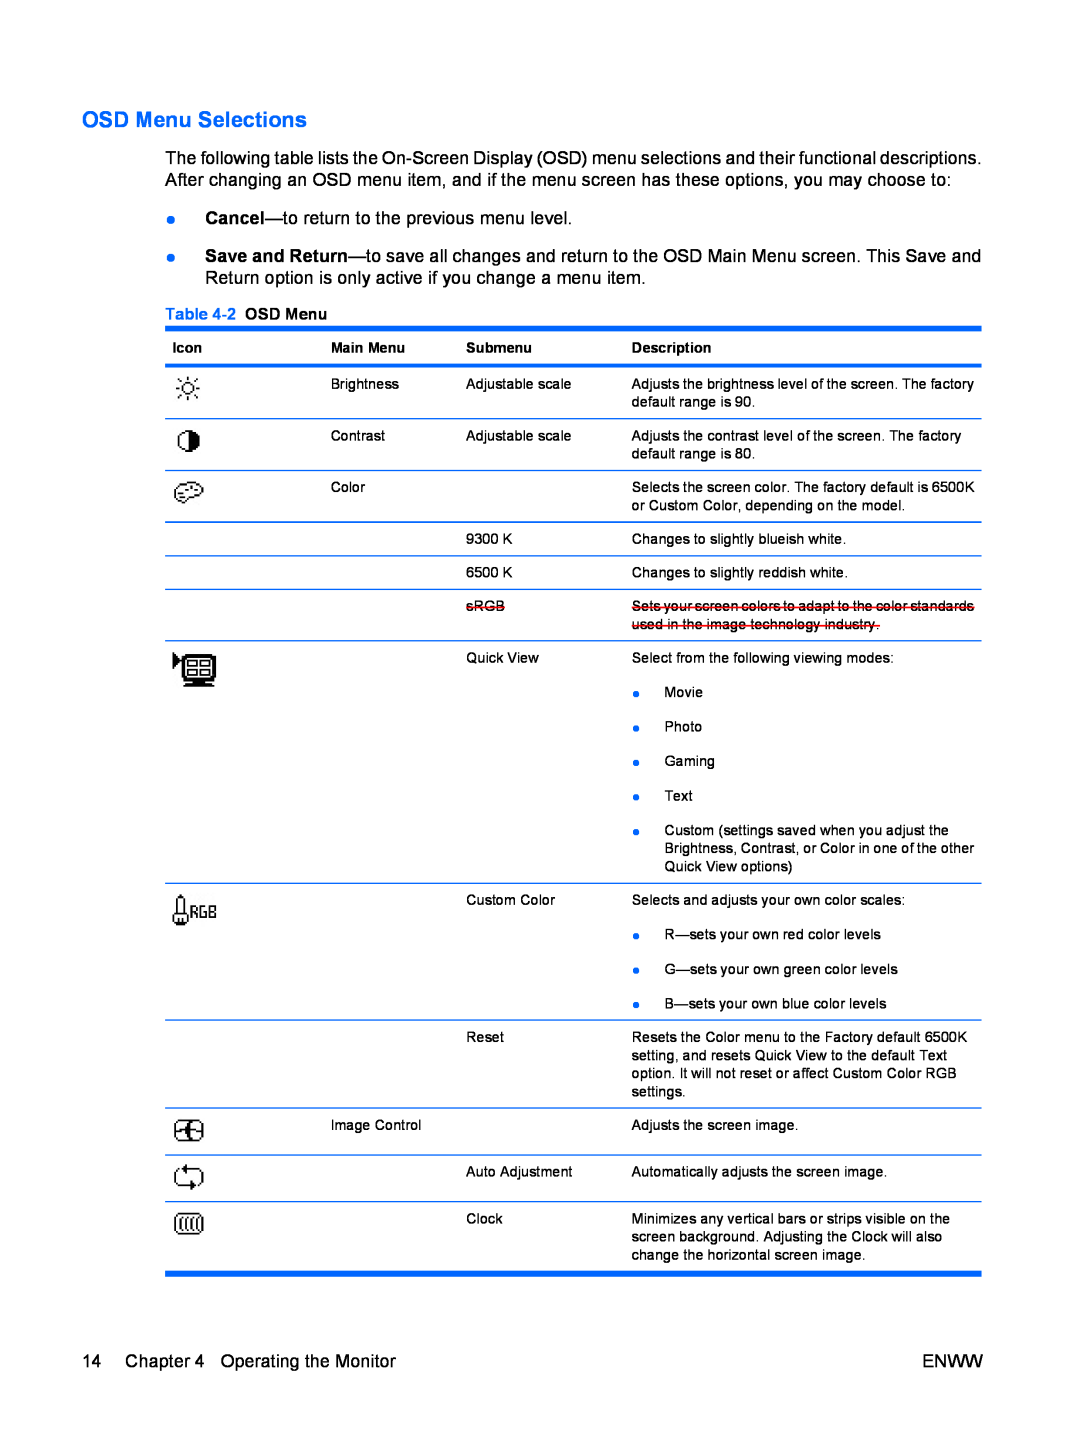 HP CQ1859E manual OSD Menu Selections, 2 OSD Menu, Icon, Main Menu, Submenu, Description 